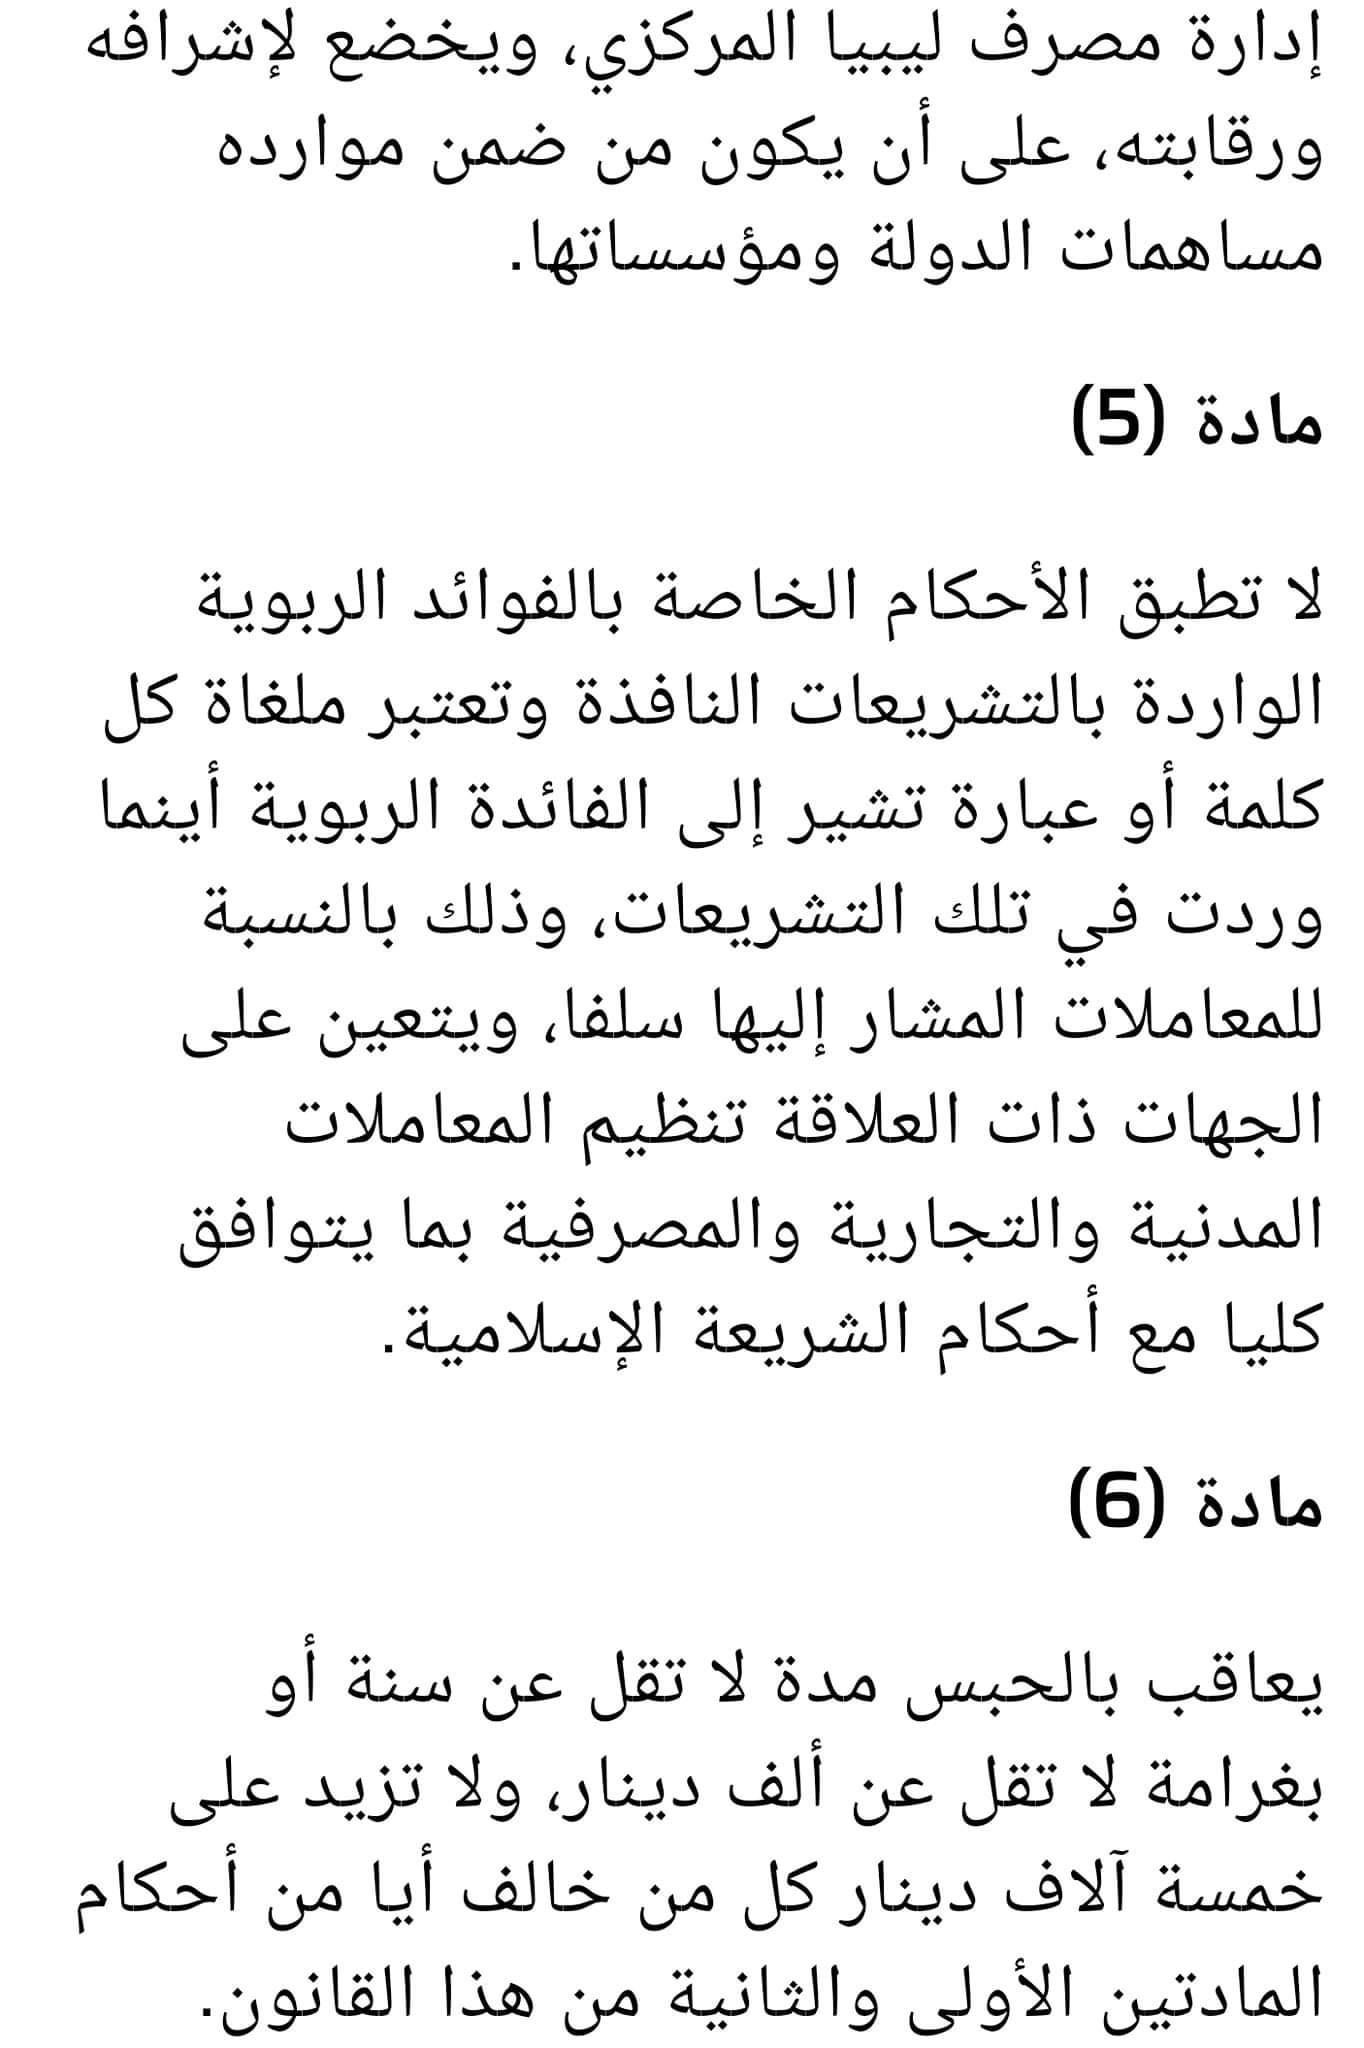 Libyan usury law4